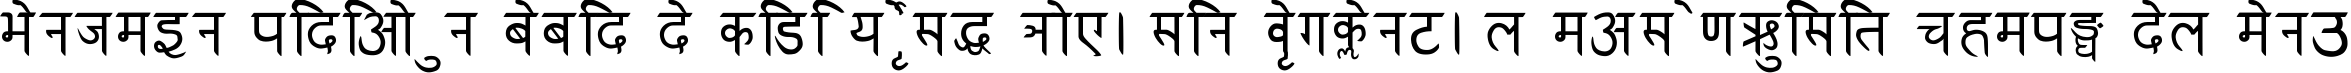 Пример написания шрифтом RK Sanskrit текста на испанском